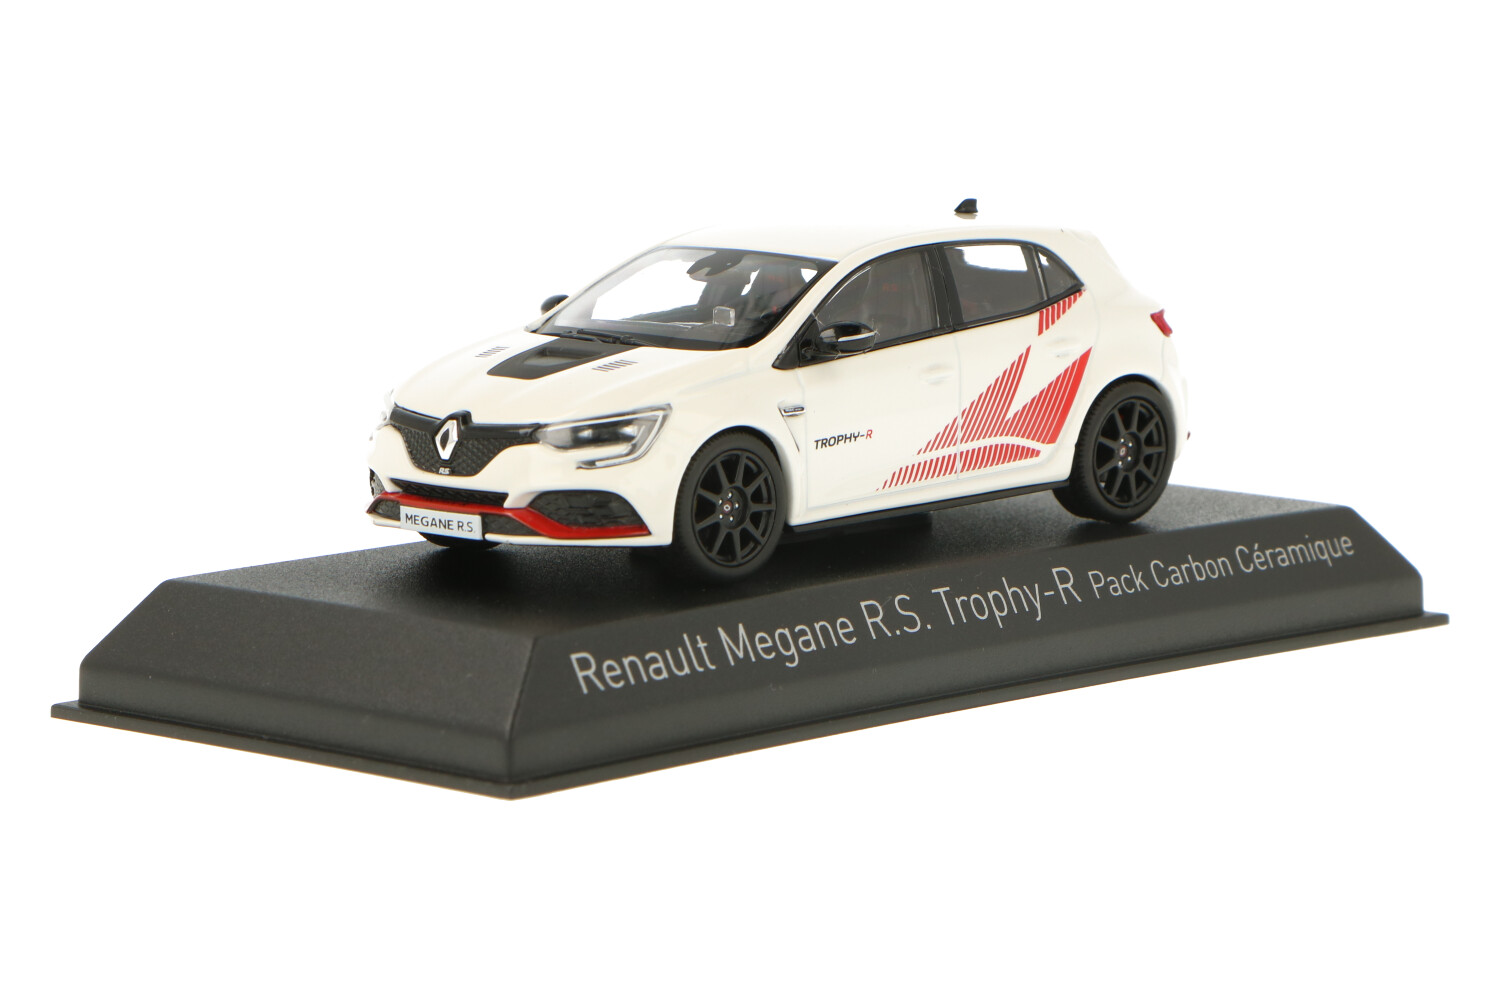 Renault-Megane-R.S.-Trophy-R-517738_13153551095177384Renault-Megane-R.S.-Trophy-R-517738_Houseofmodelcars_.jpg